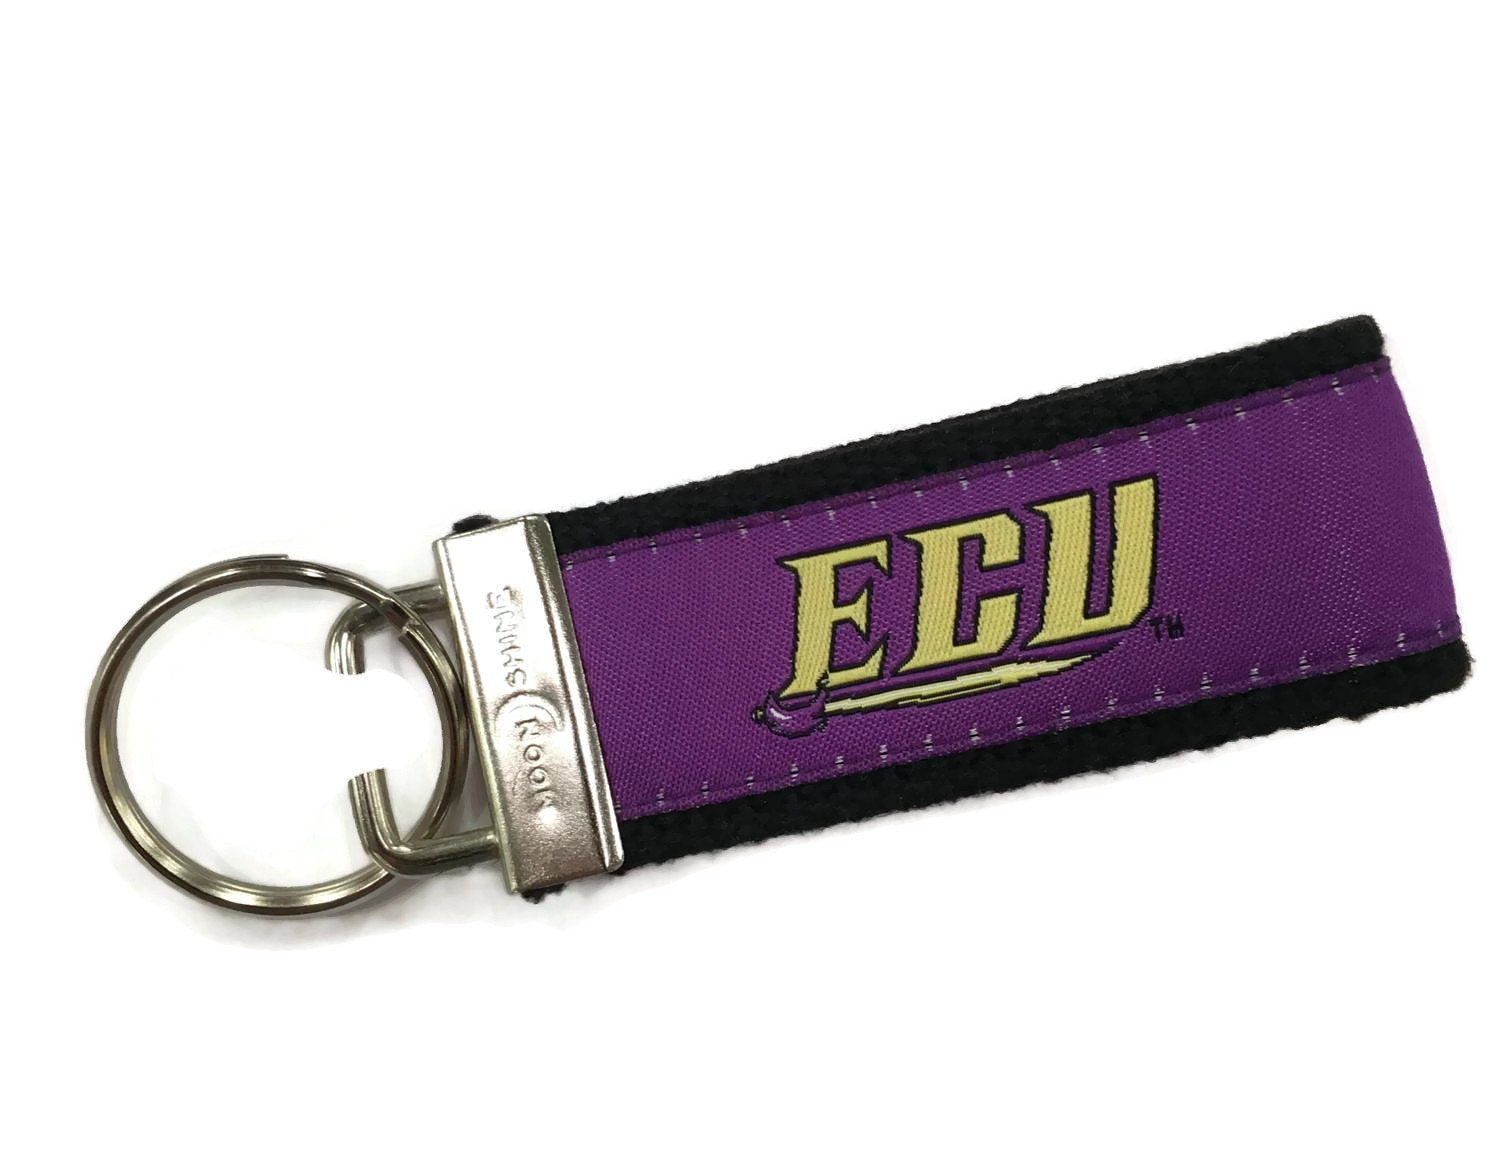 ECU East Carolina University licensed web key chain